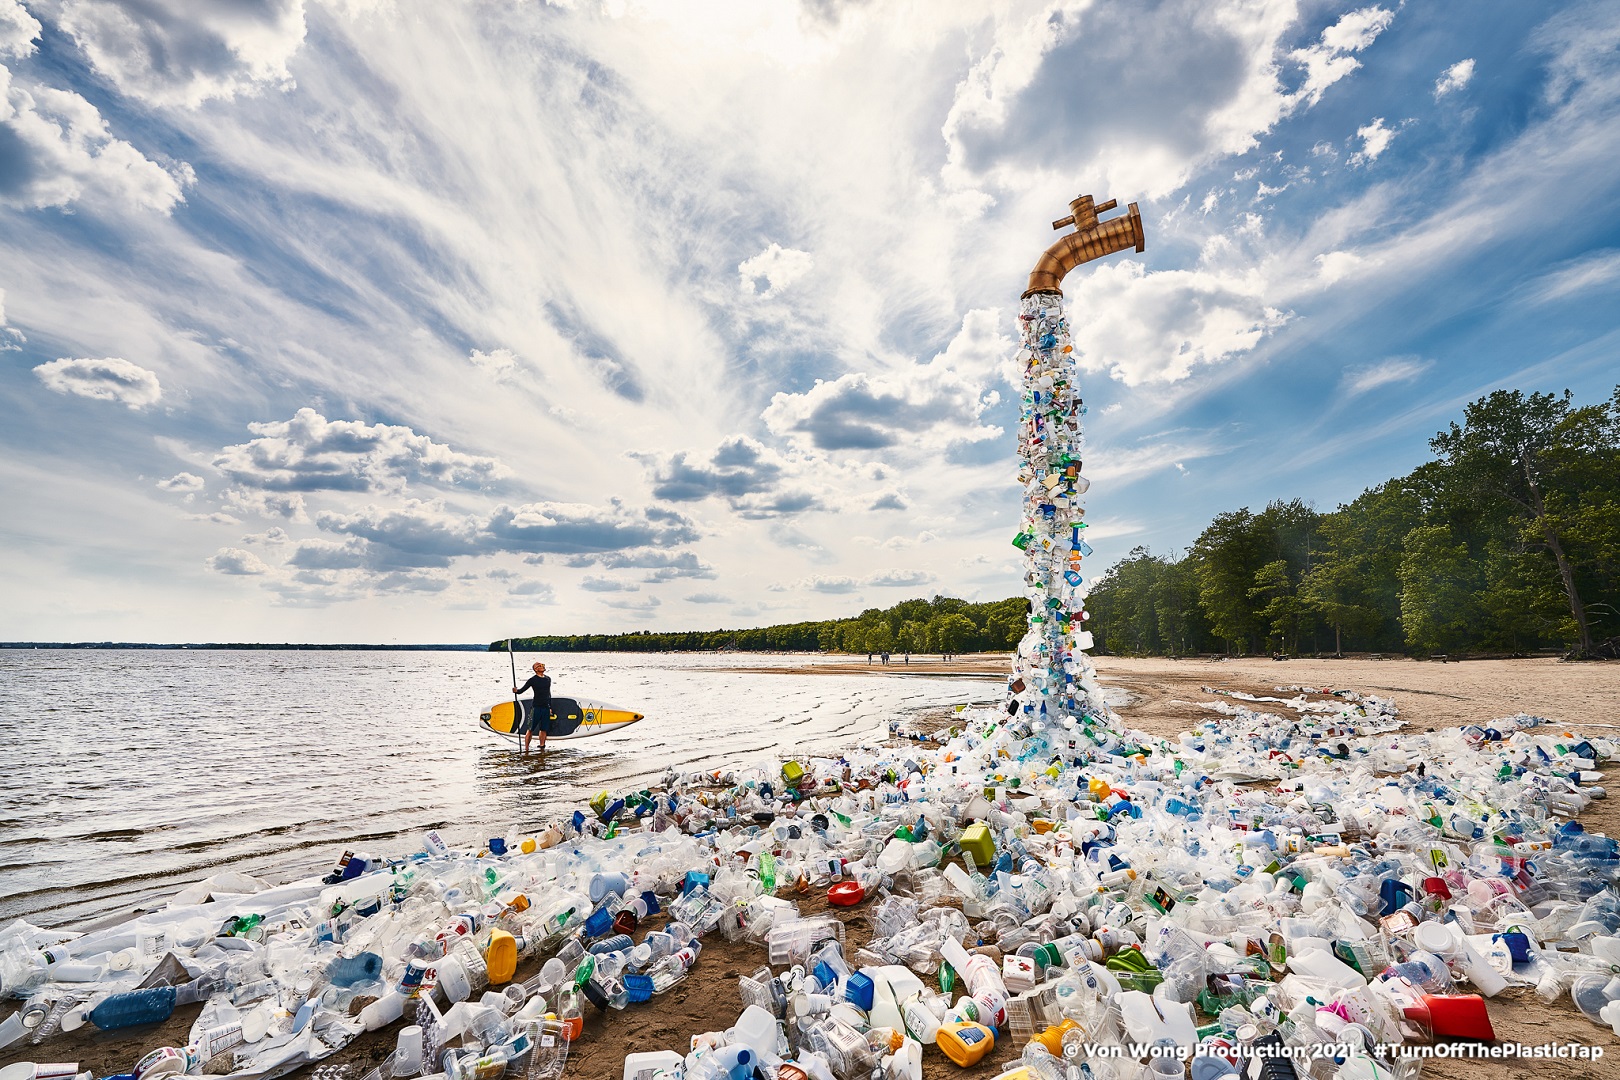 Canadian artist Benjamin Von Wong’s latest installation urges world to end single-use plastics